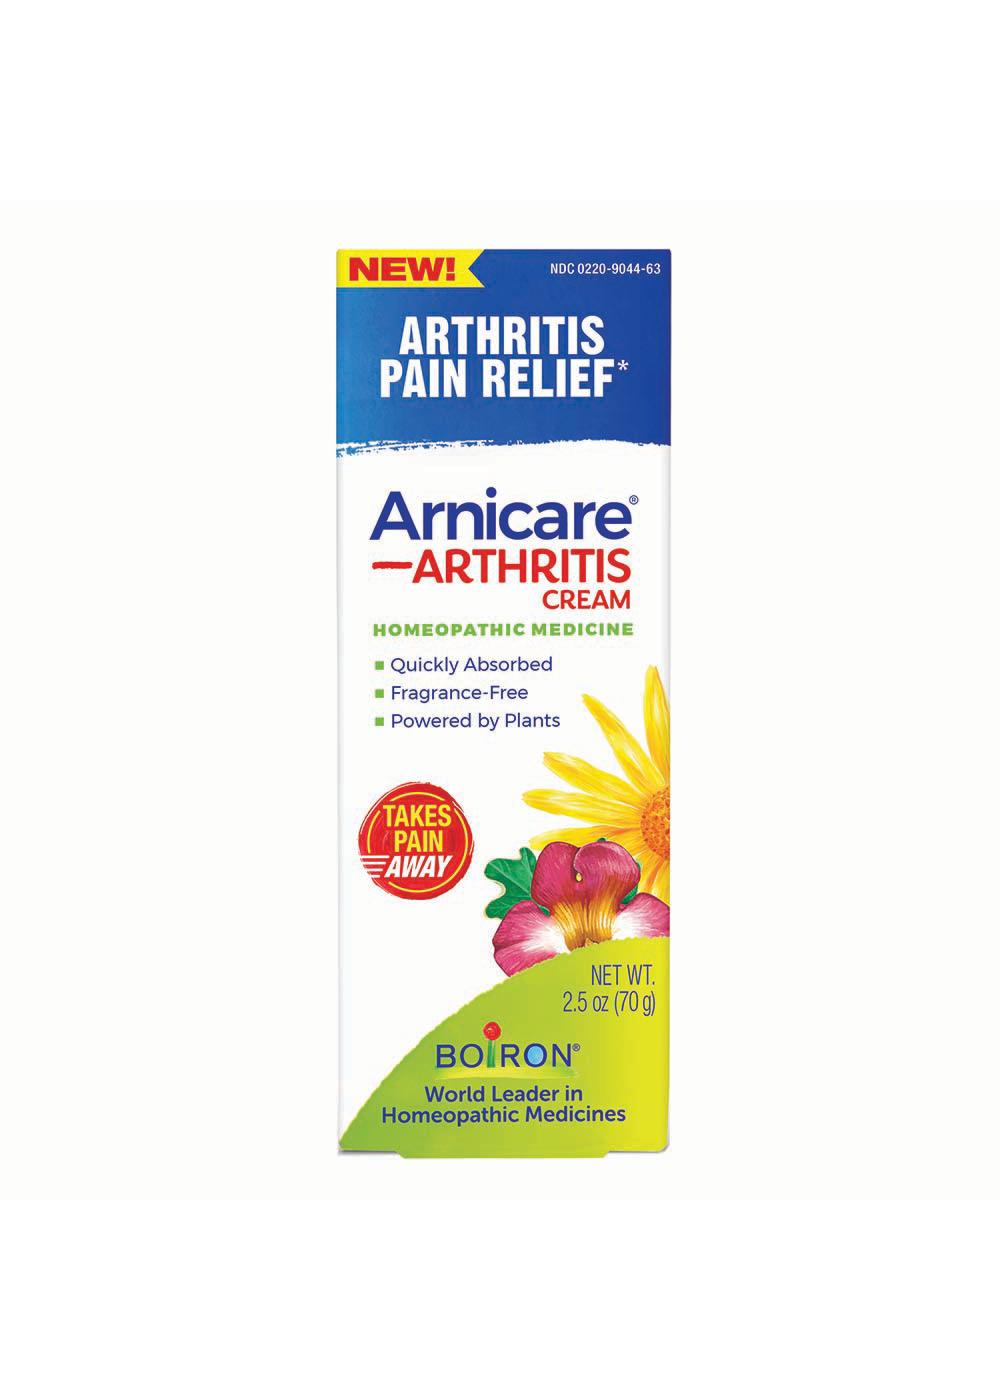 Arnicare Arthritis Cream; image 1 of 2